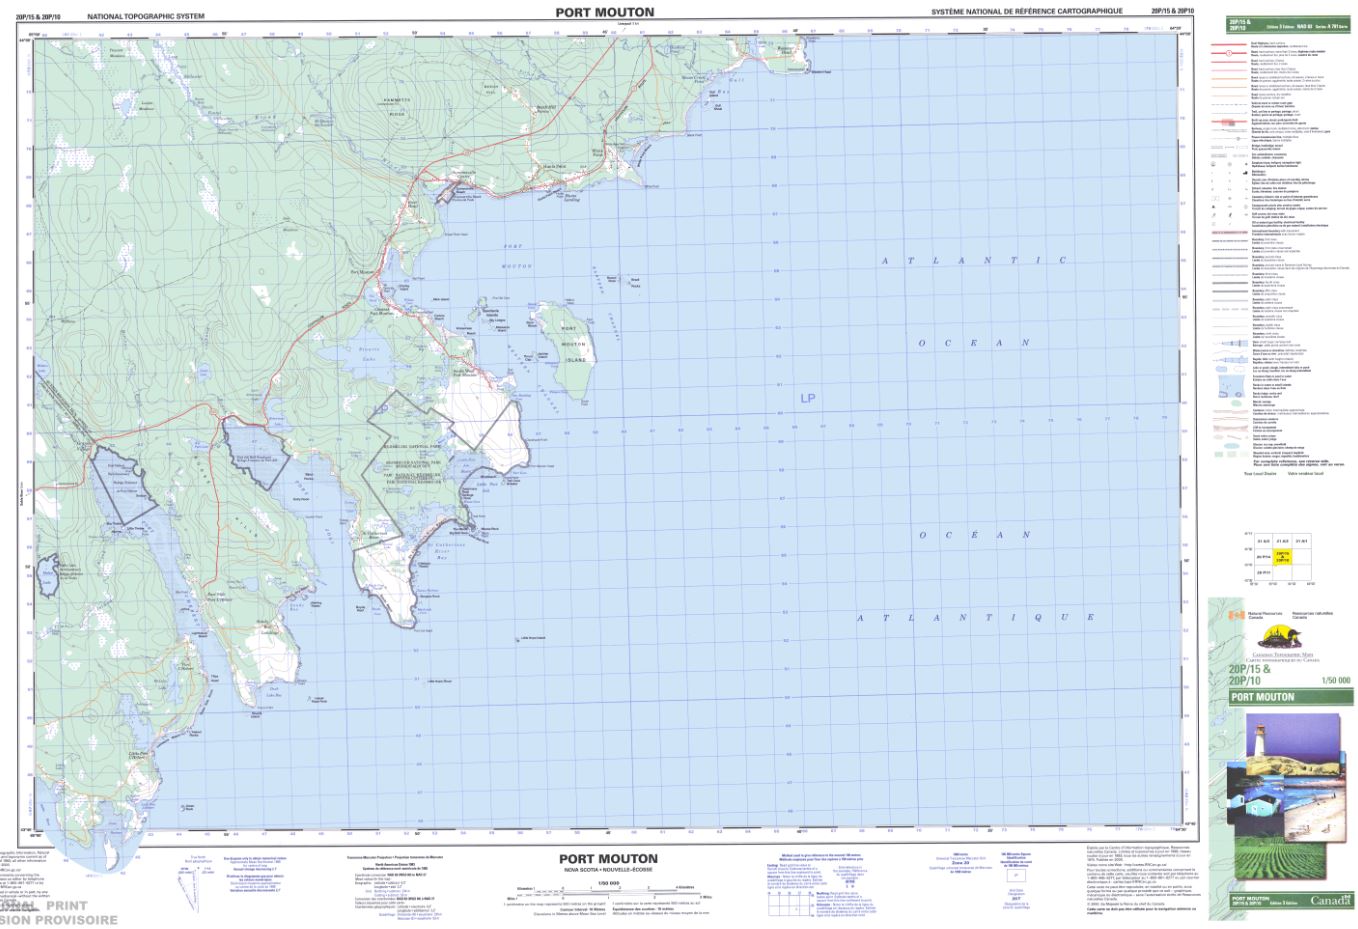 20P/15 Port Mouton Topographic Map Nova Scotia